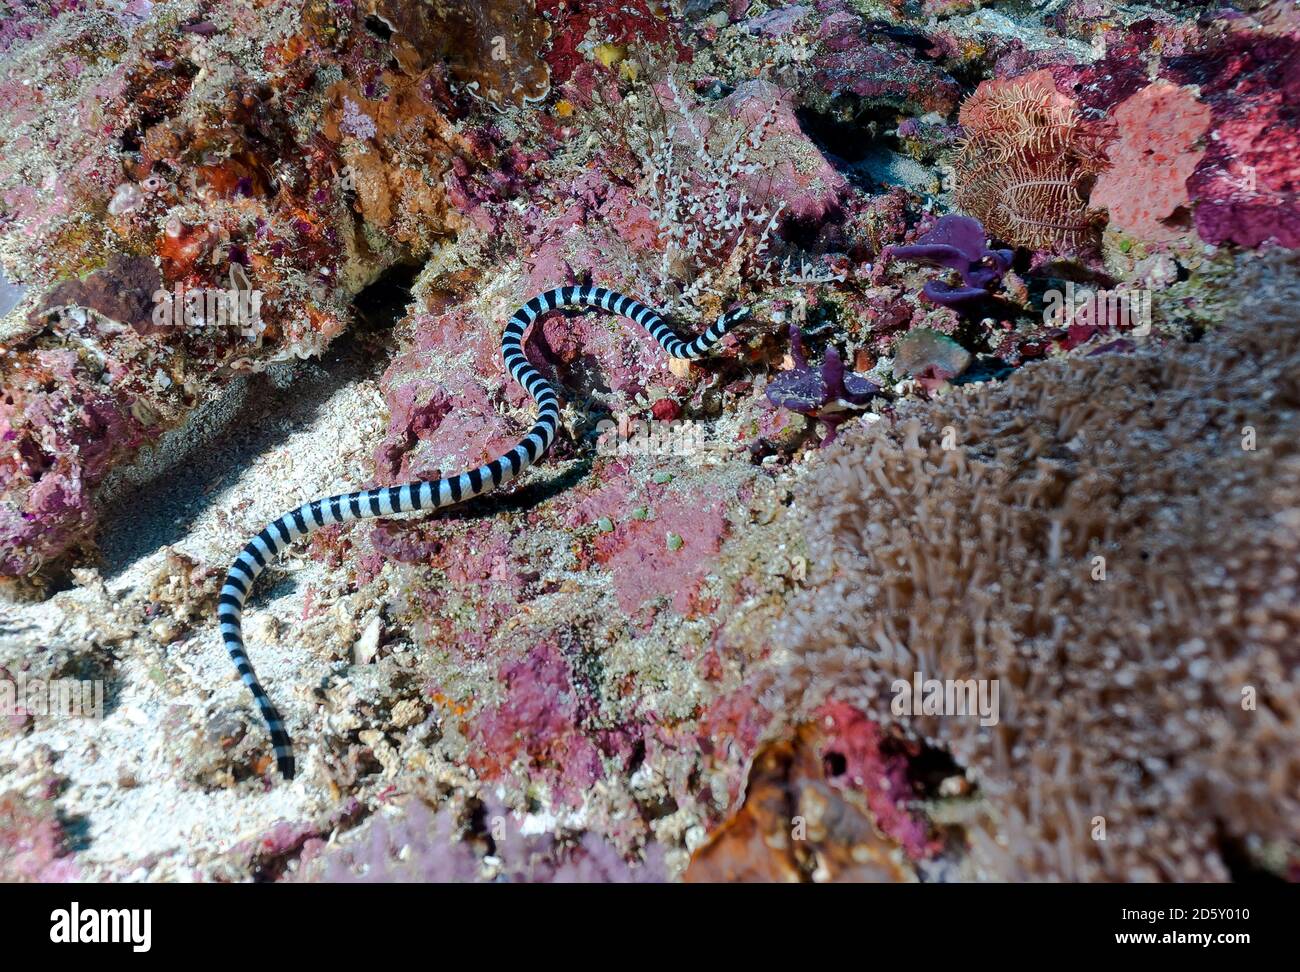 Indonesien, Bali, Nusa Lembongan, schwach gebänderte Seeschlange, Hydrophis belcheri Stockfoto